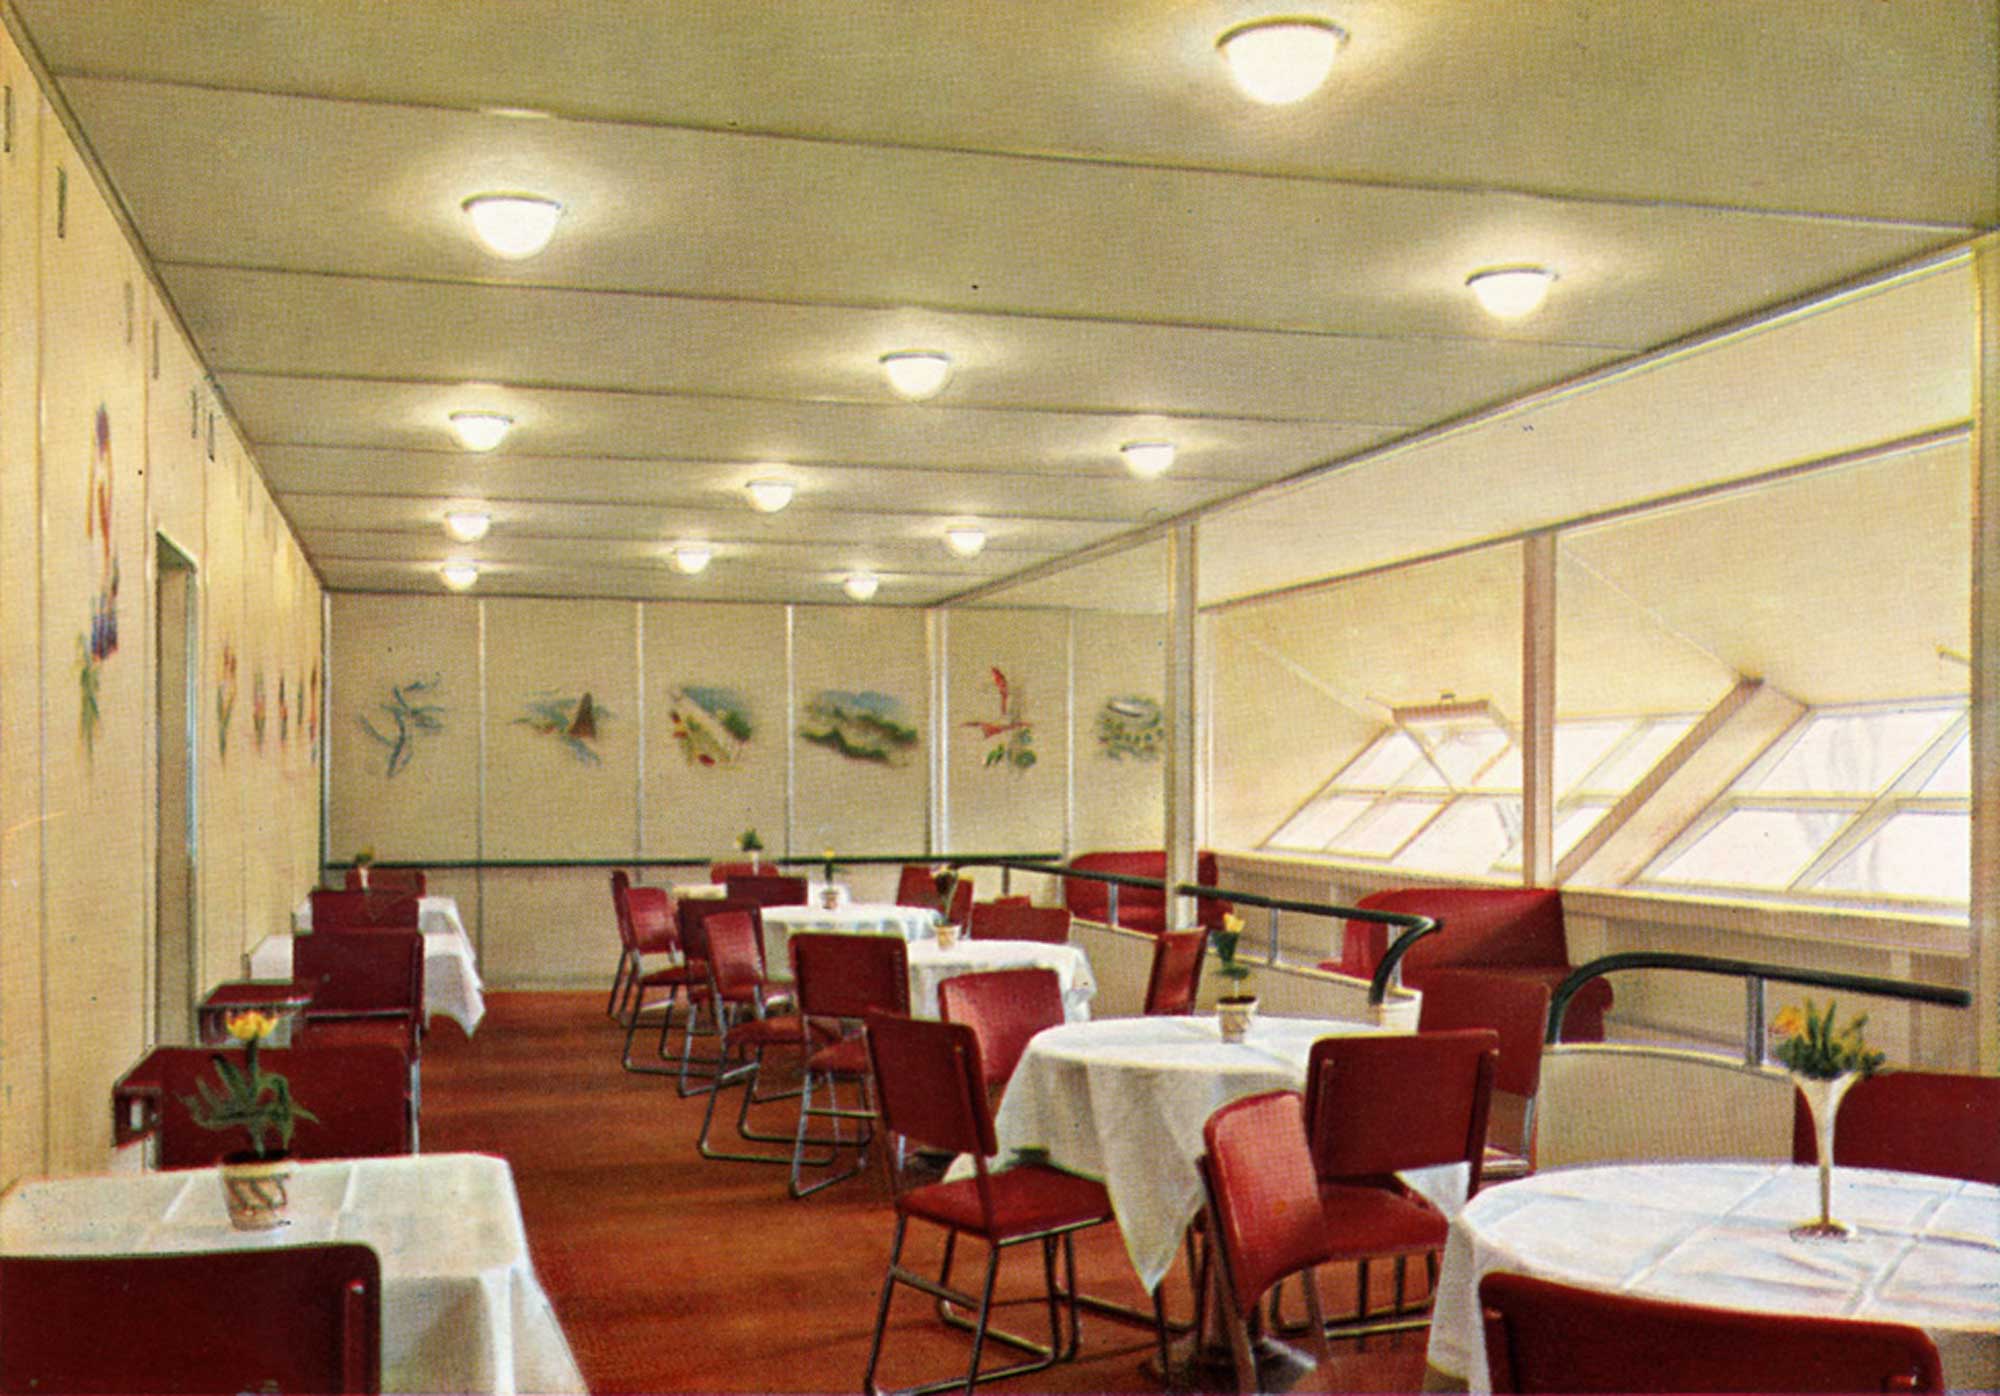 Dining Room of Airship Hindenburg (Airships.net collection)